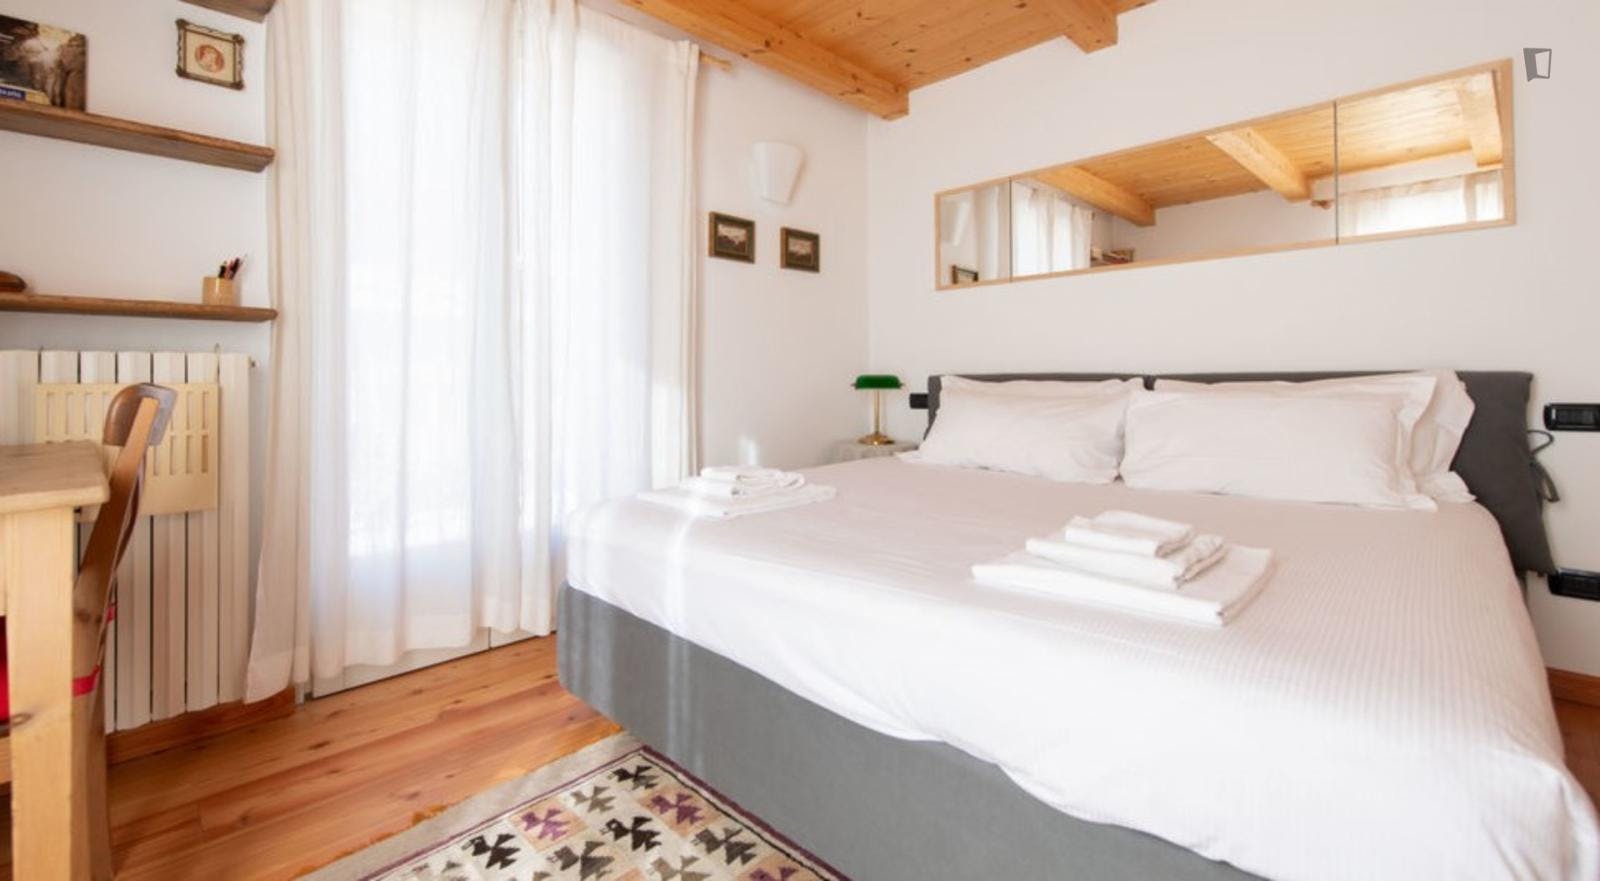 3-Bedroom apartment in Bormio